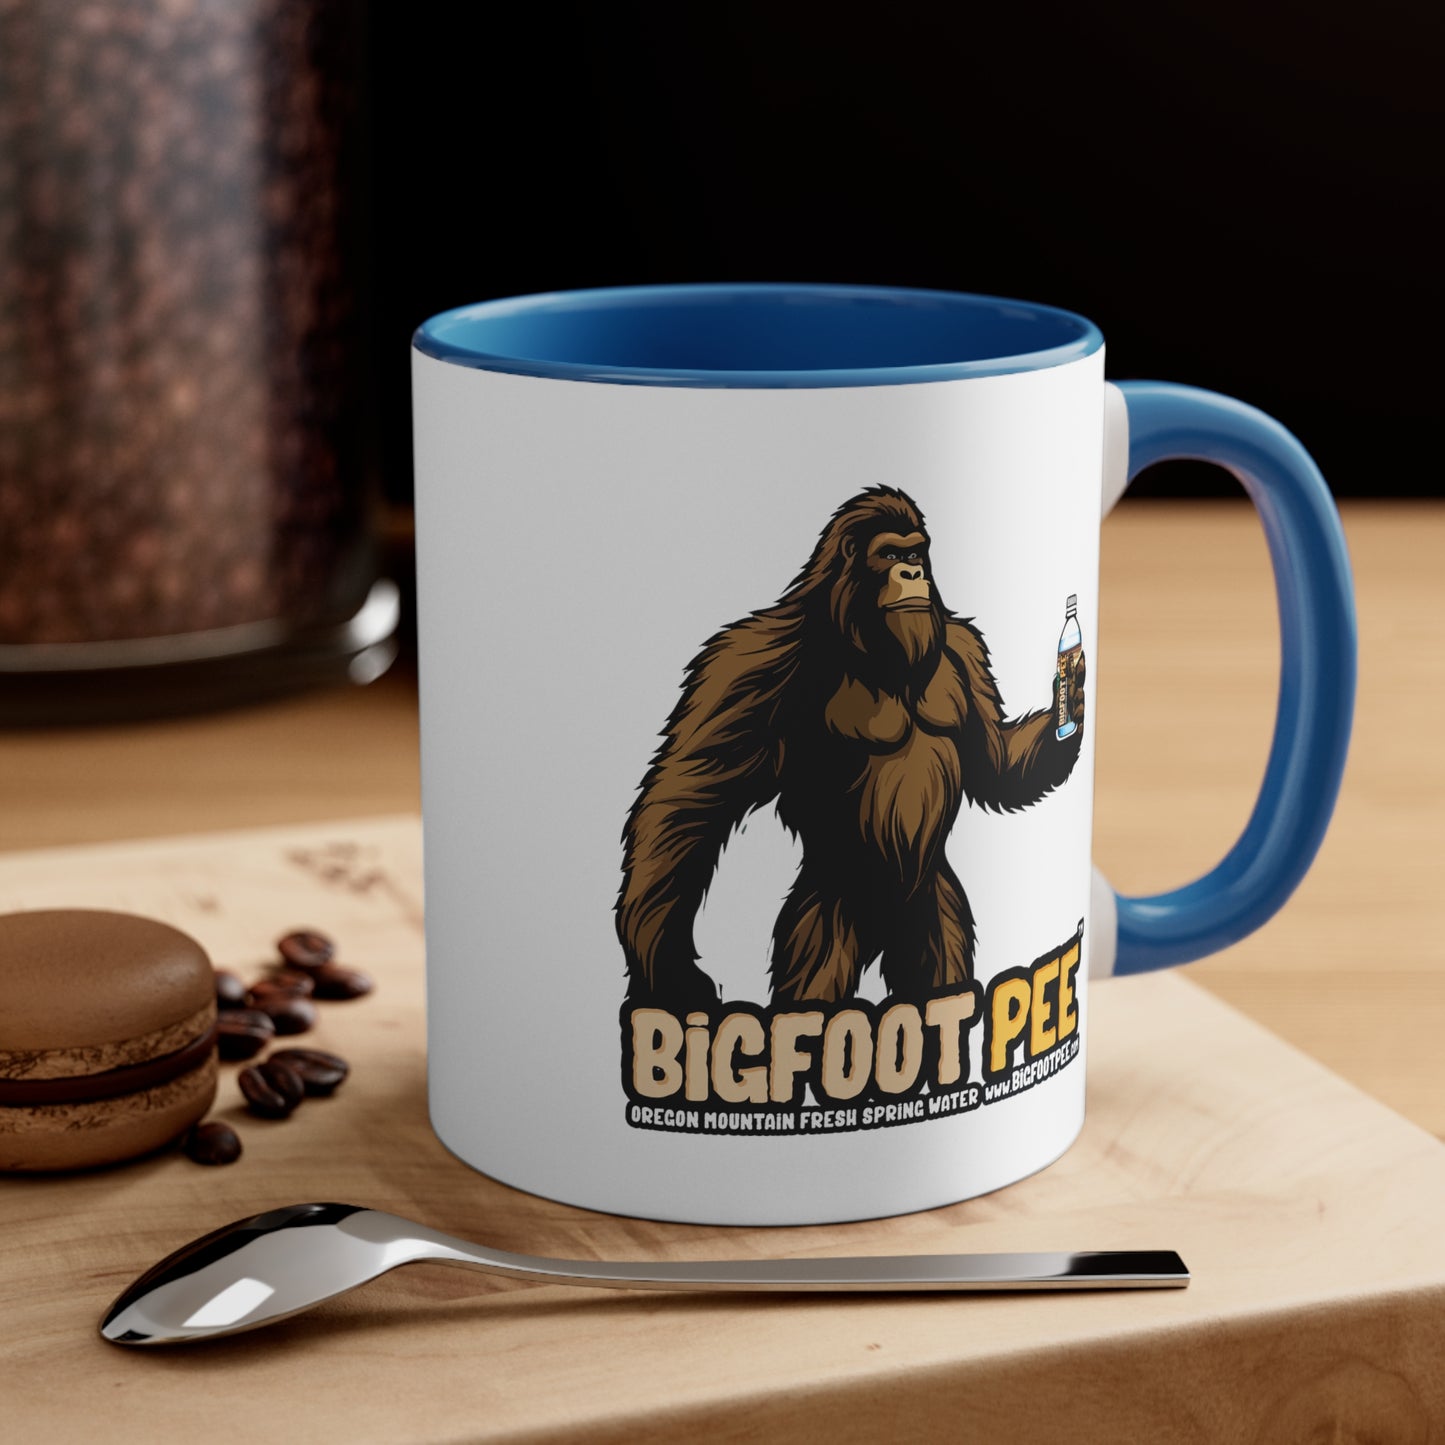 Bigfoot Pee Accent Coffee Mug, 11oz